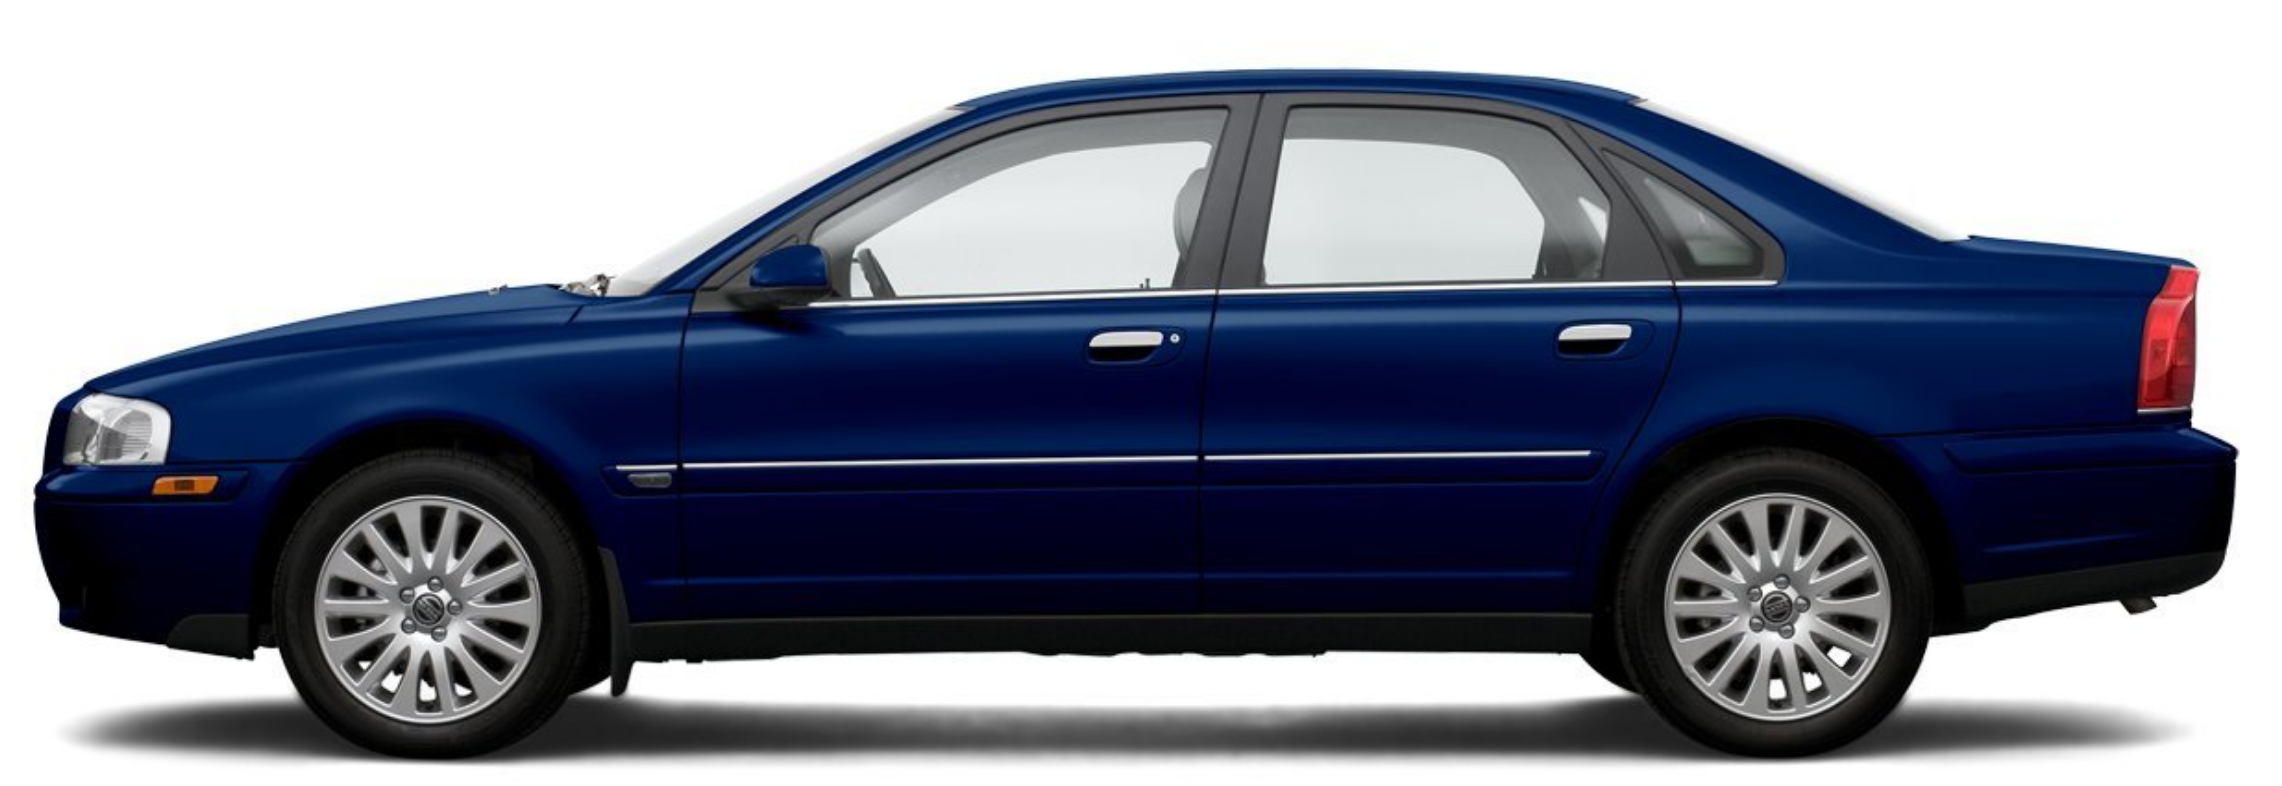 Afbeelding van 74HHVN, blauwe Volvo S80 2.4 140 Pk Aut. sedan